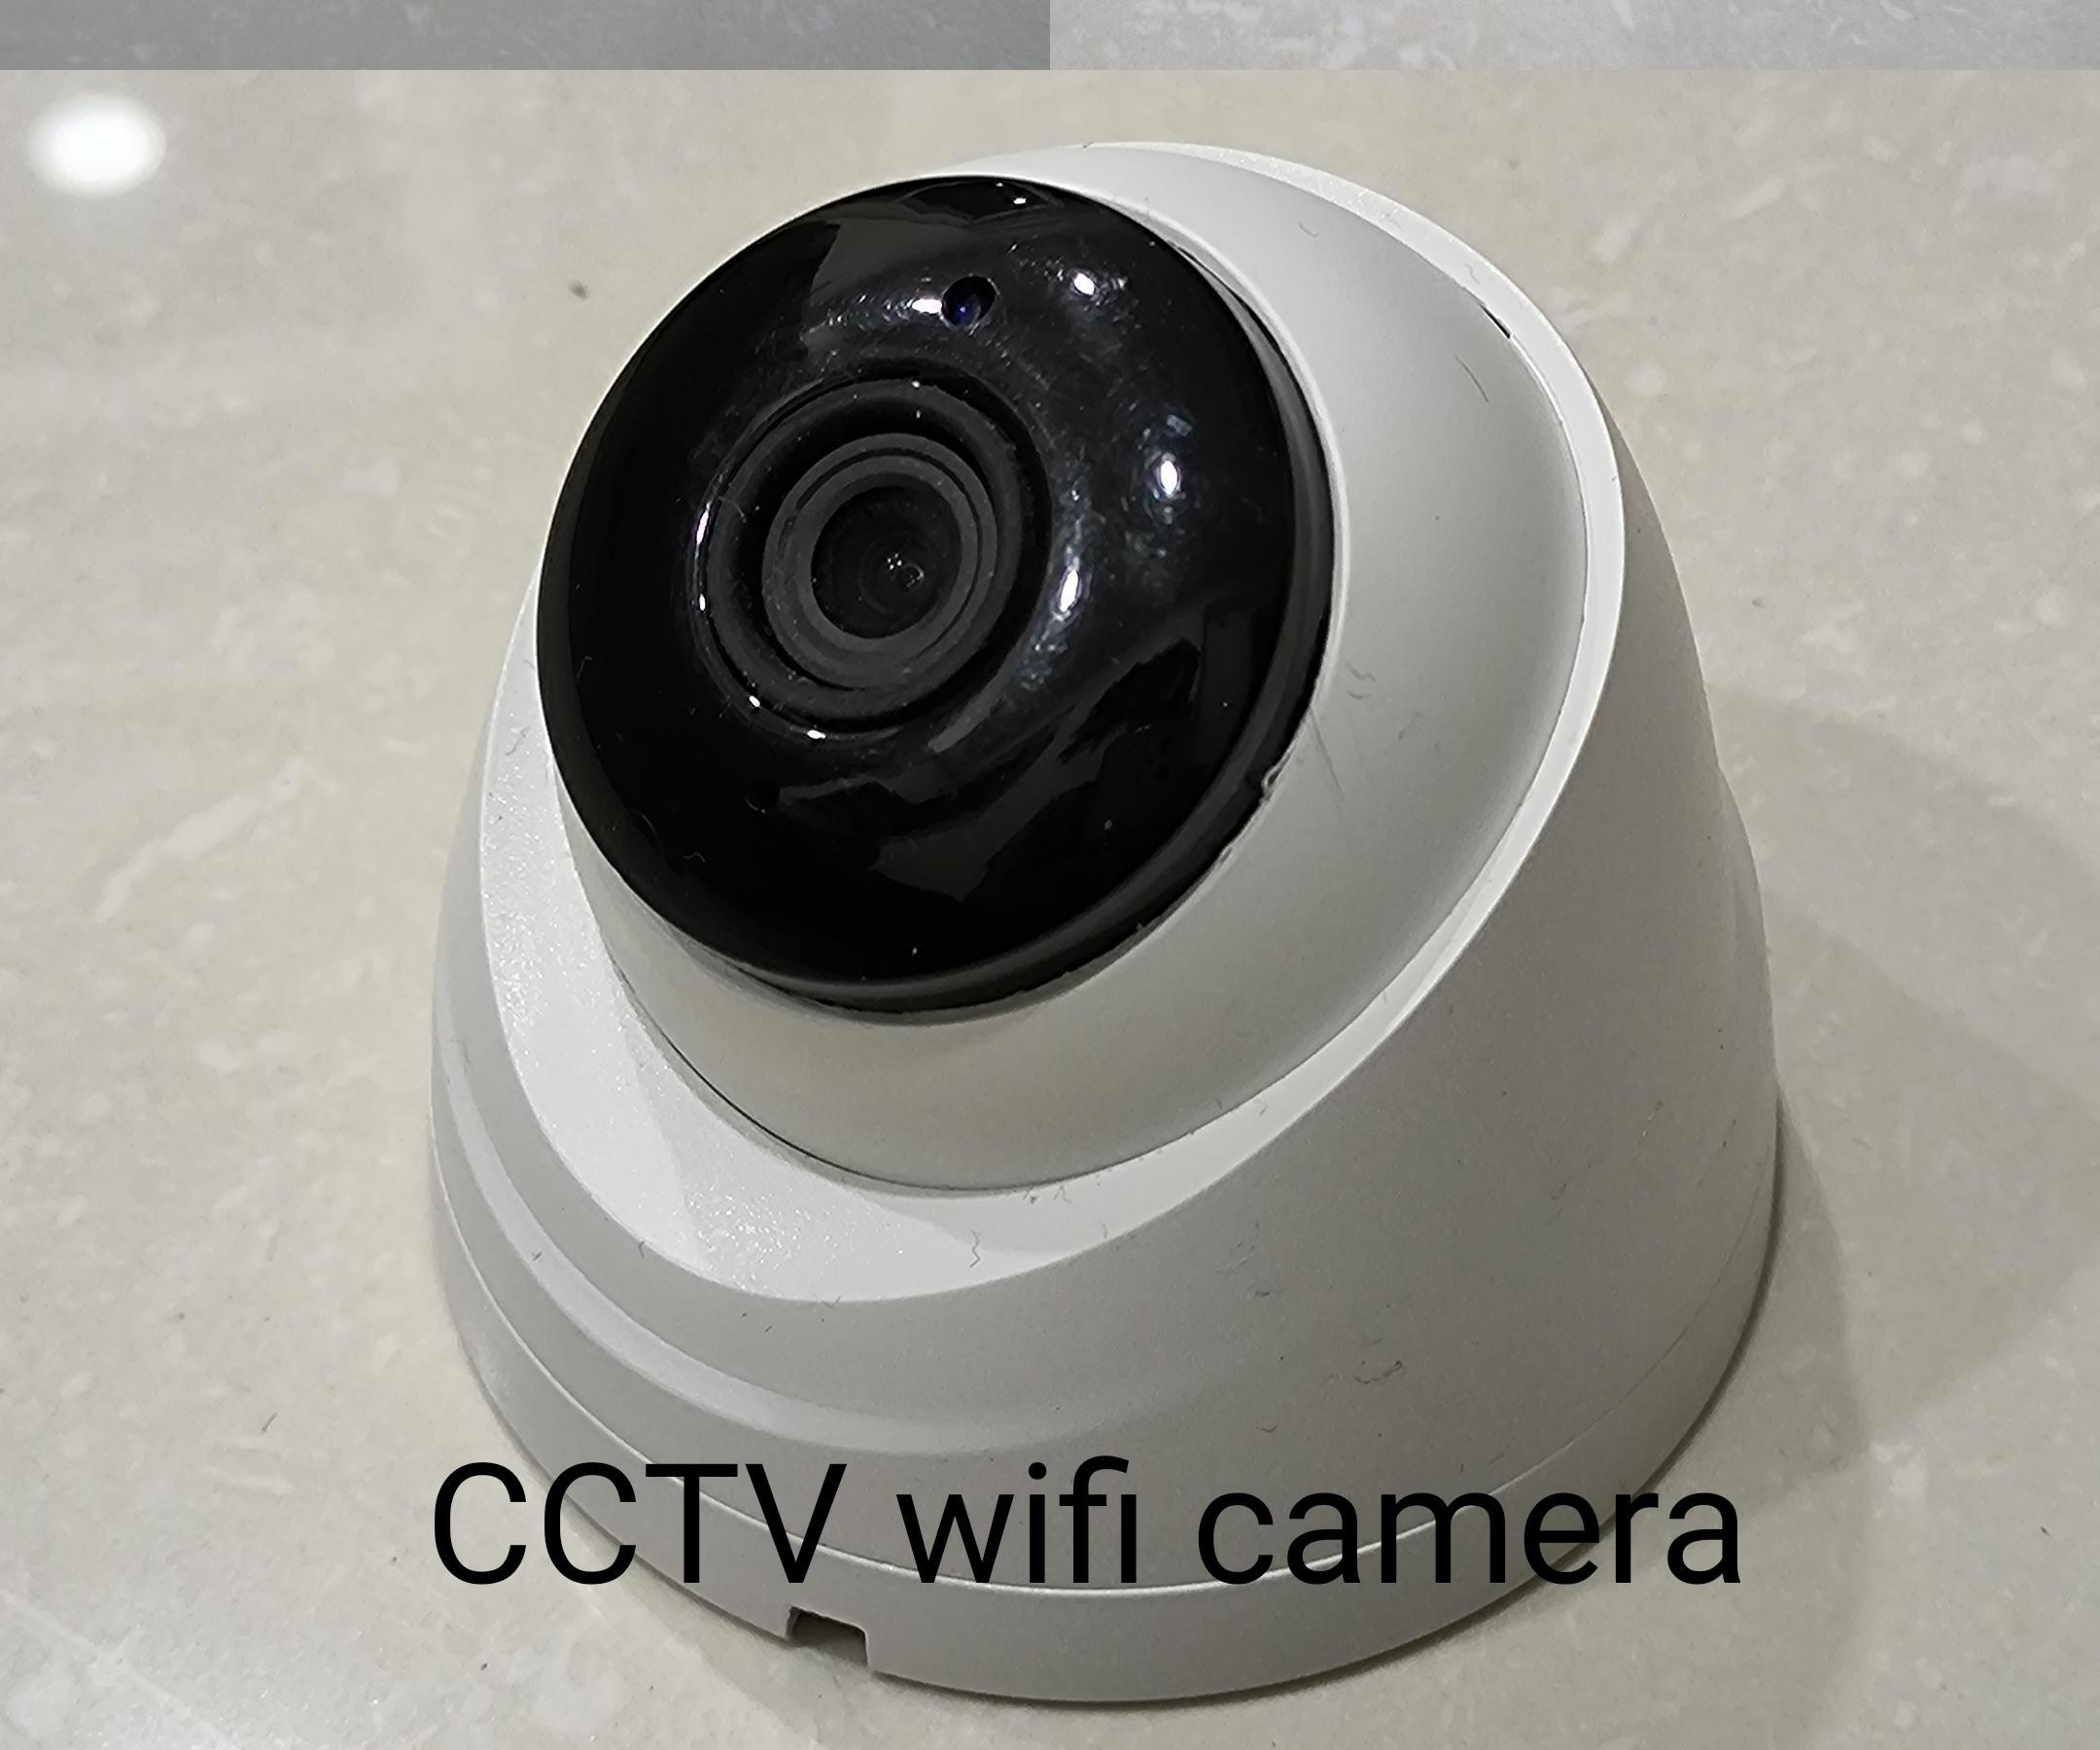 Convert Dummy Camera Into a Real CCTV Camera